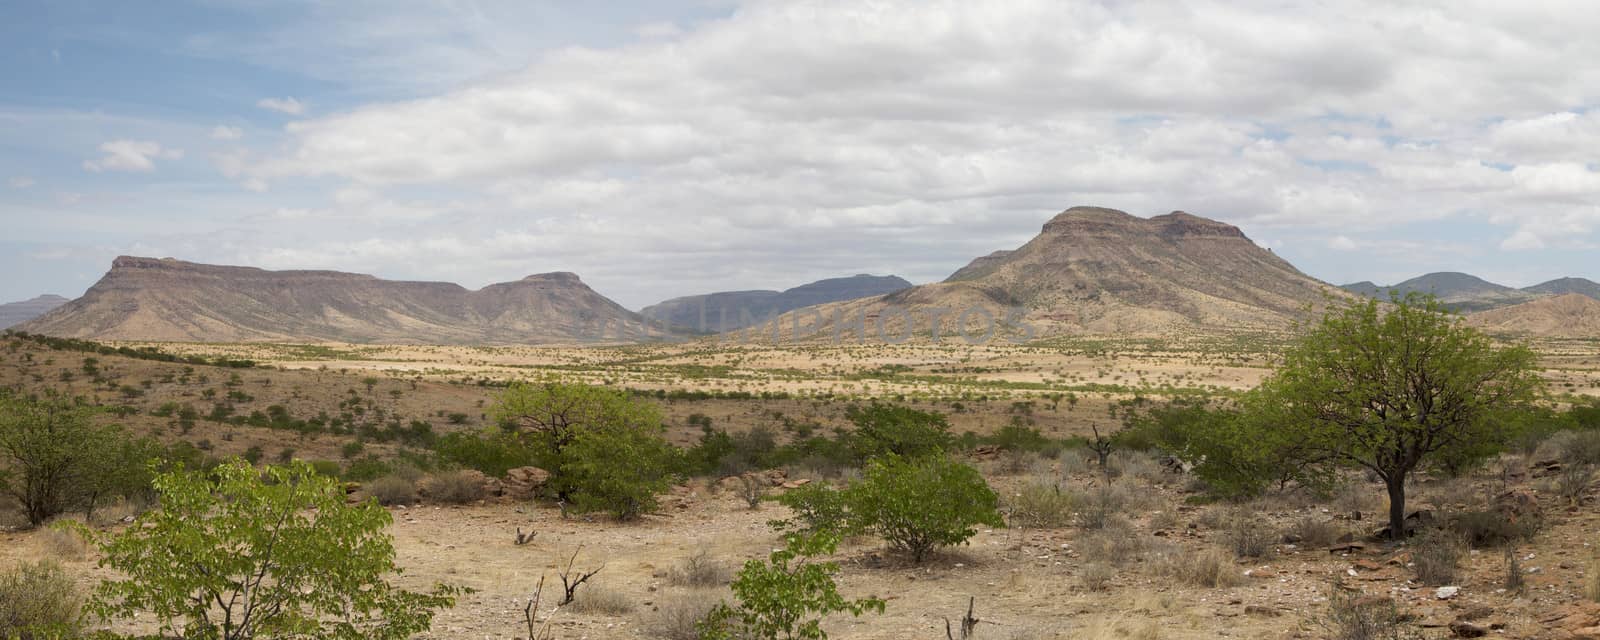 Wild landscape in the Kaokoland desert in Namibia.